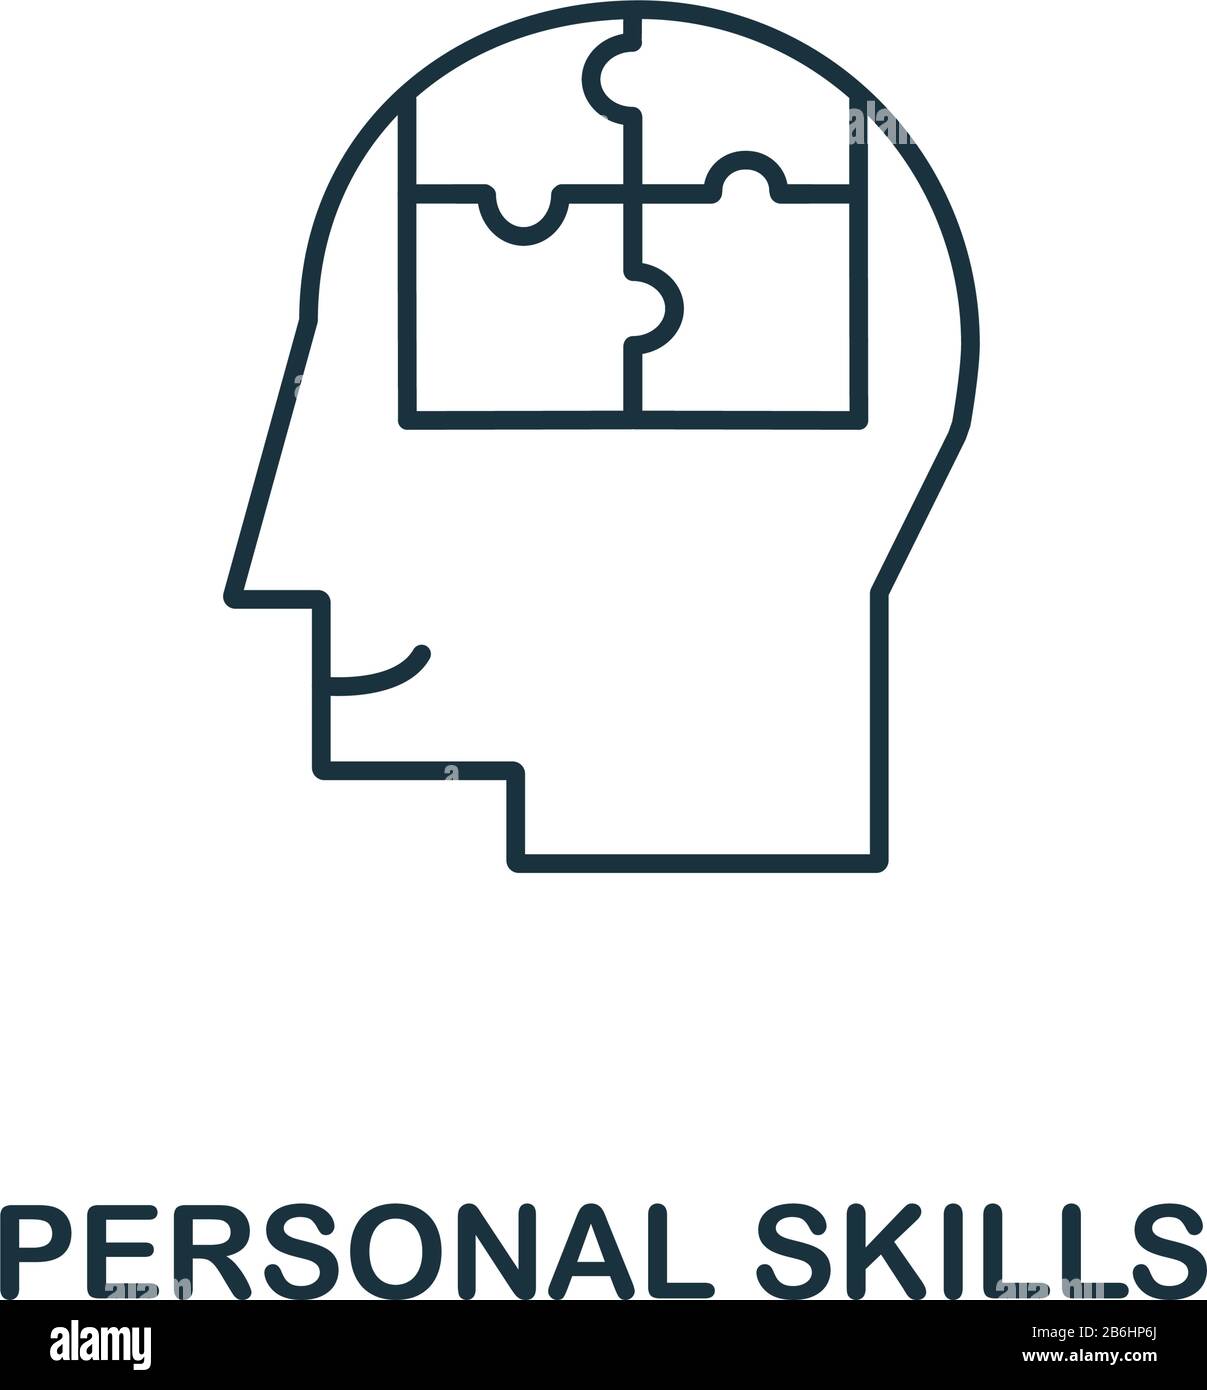 personal skills icon